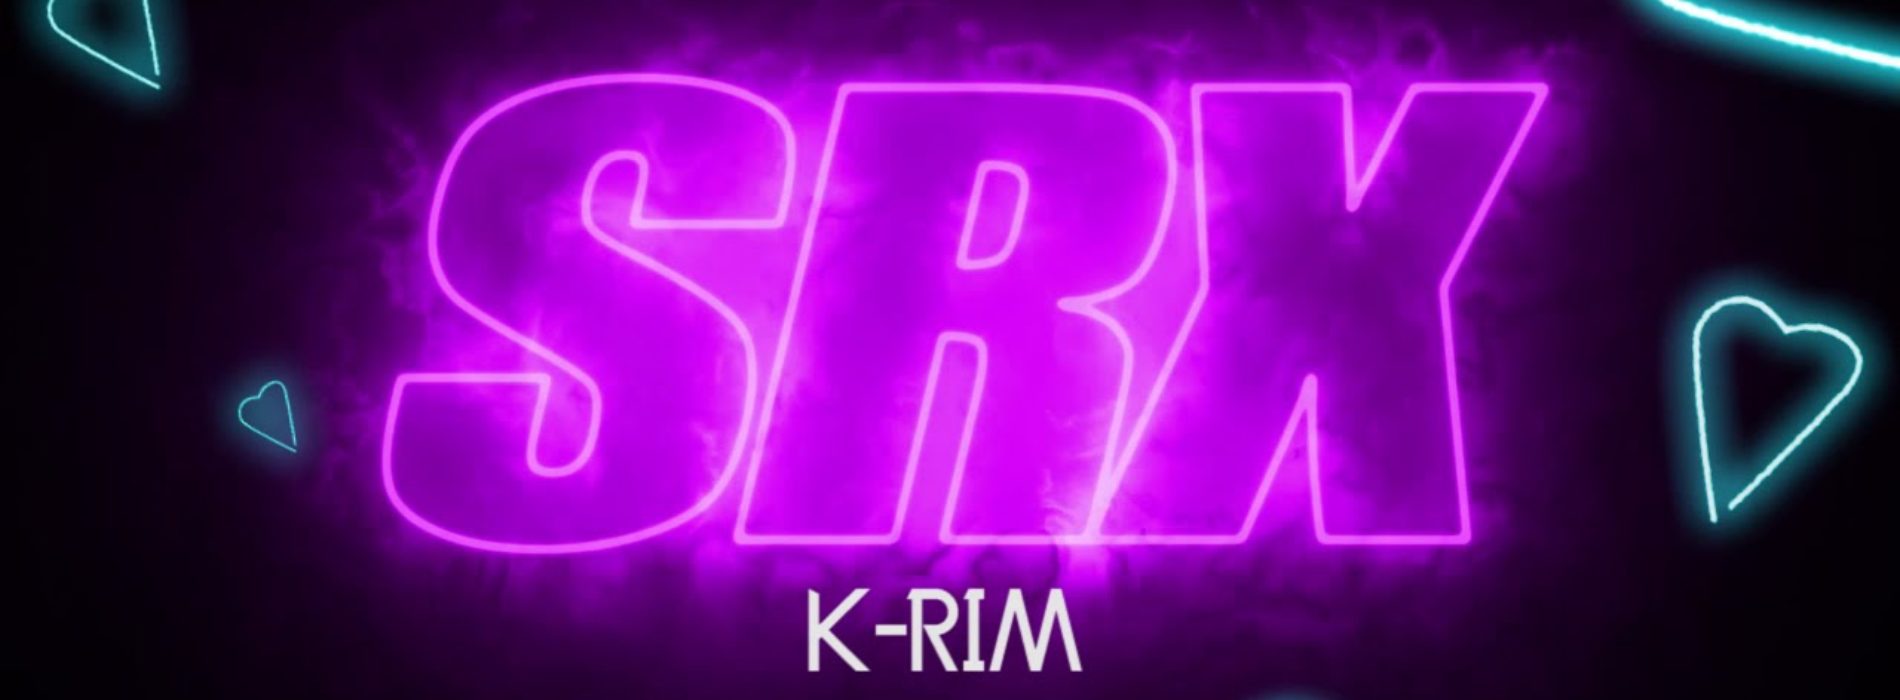 Boss&Youth (K-rim) – SRX – Mai 2020